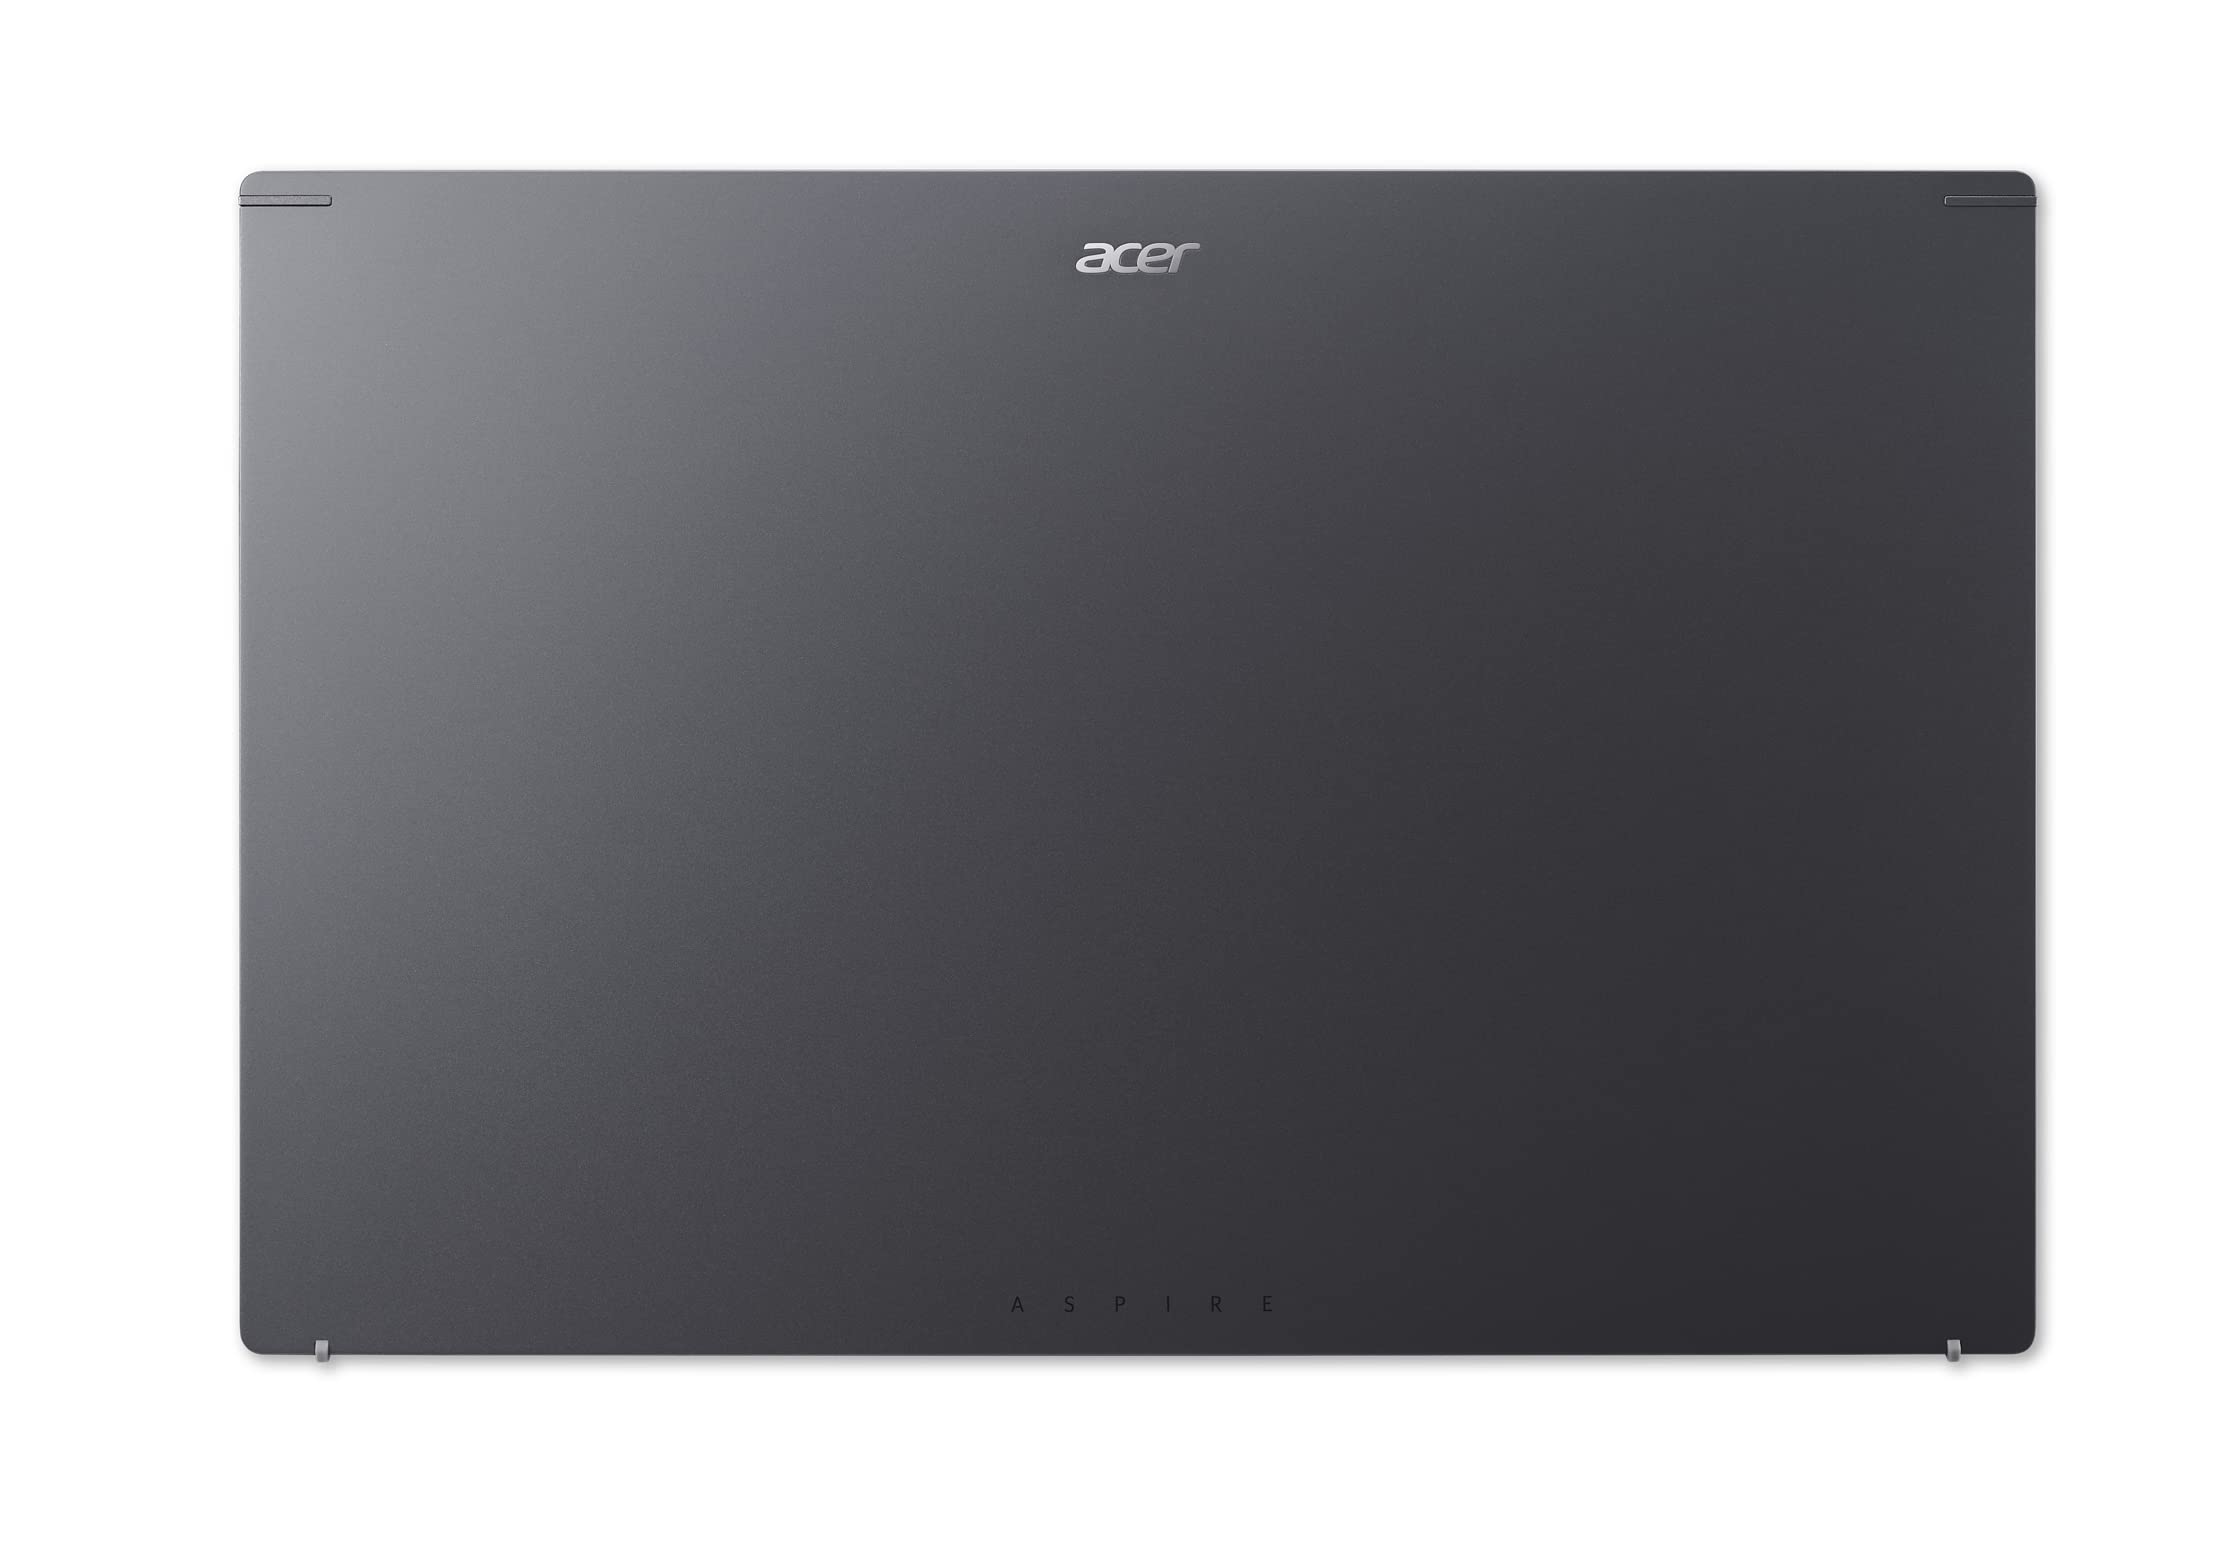 Acer Aspire 5 Slim Laptop | 15.6